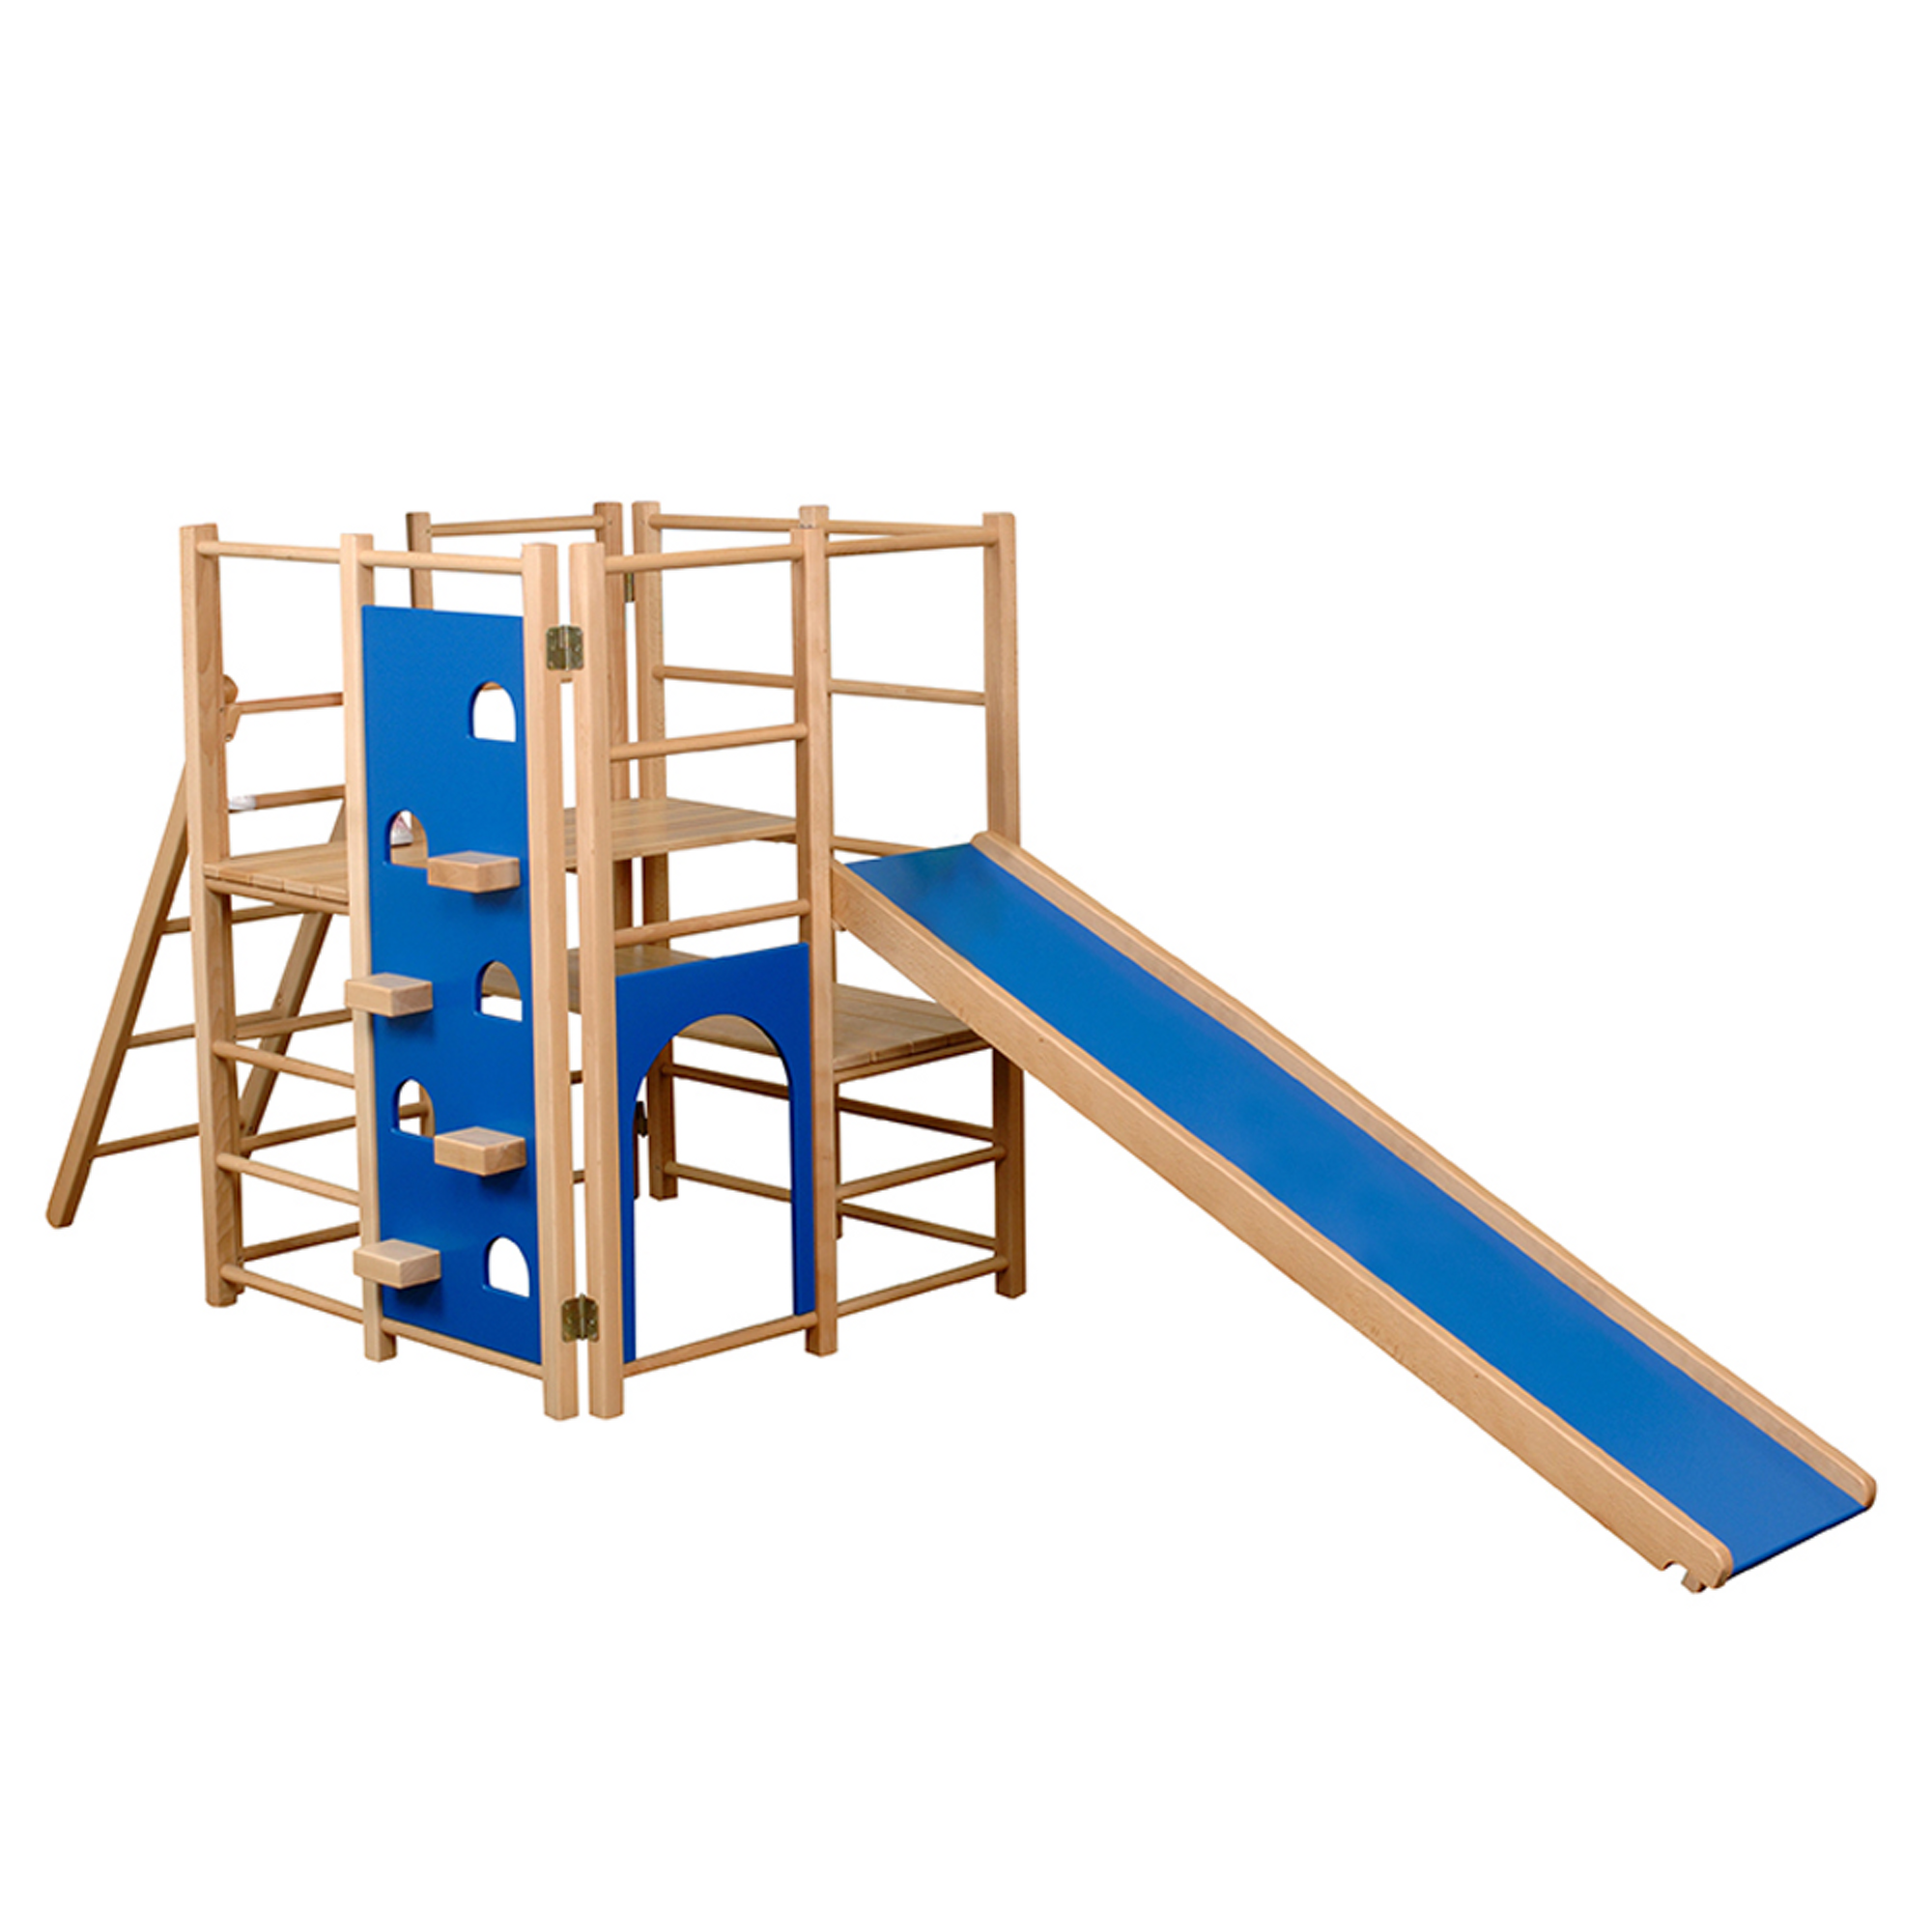 a frame climbing frame